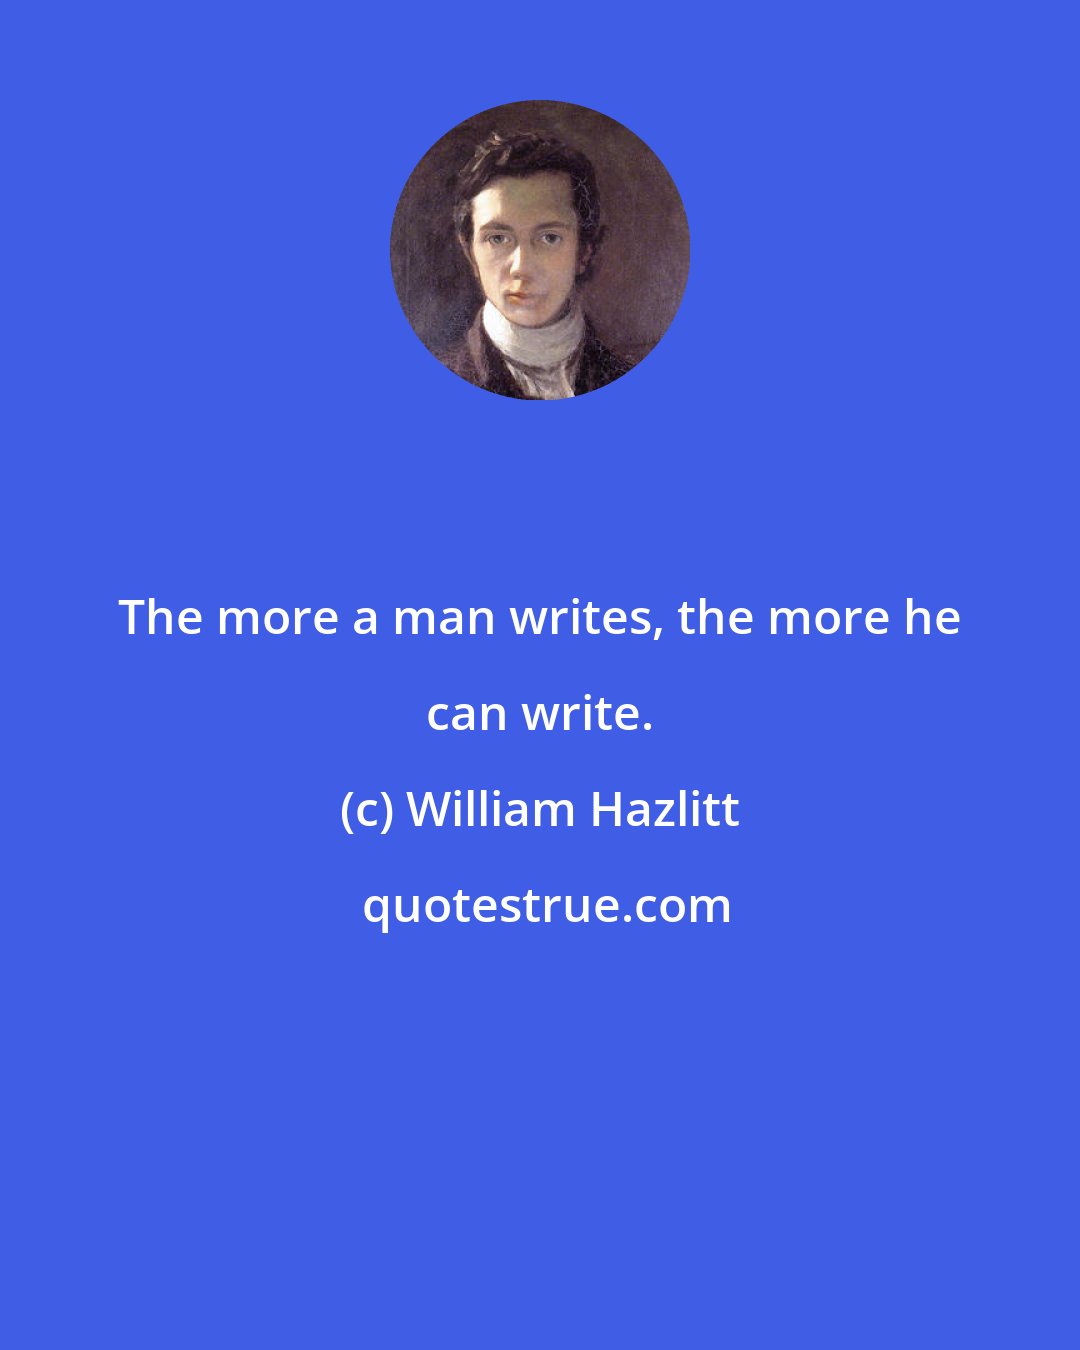 William Hazlitt: The more a man writes, the more he can write.